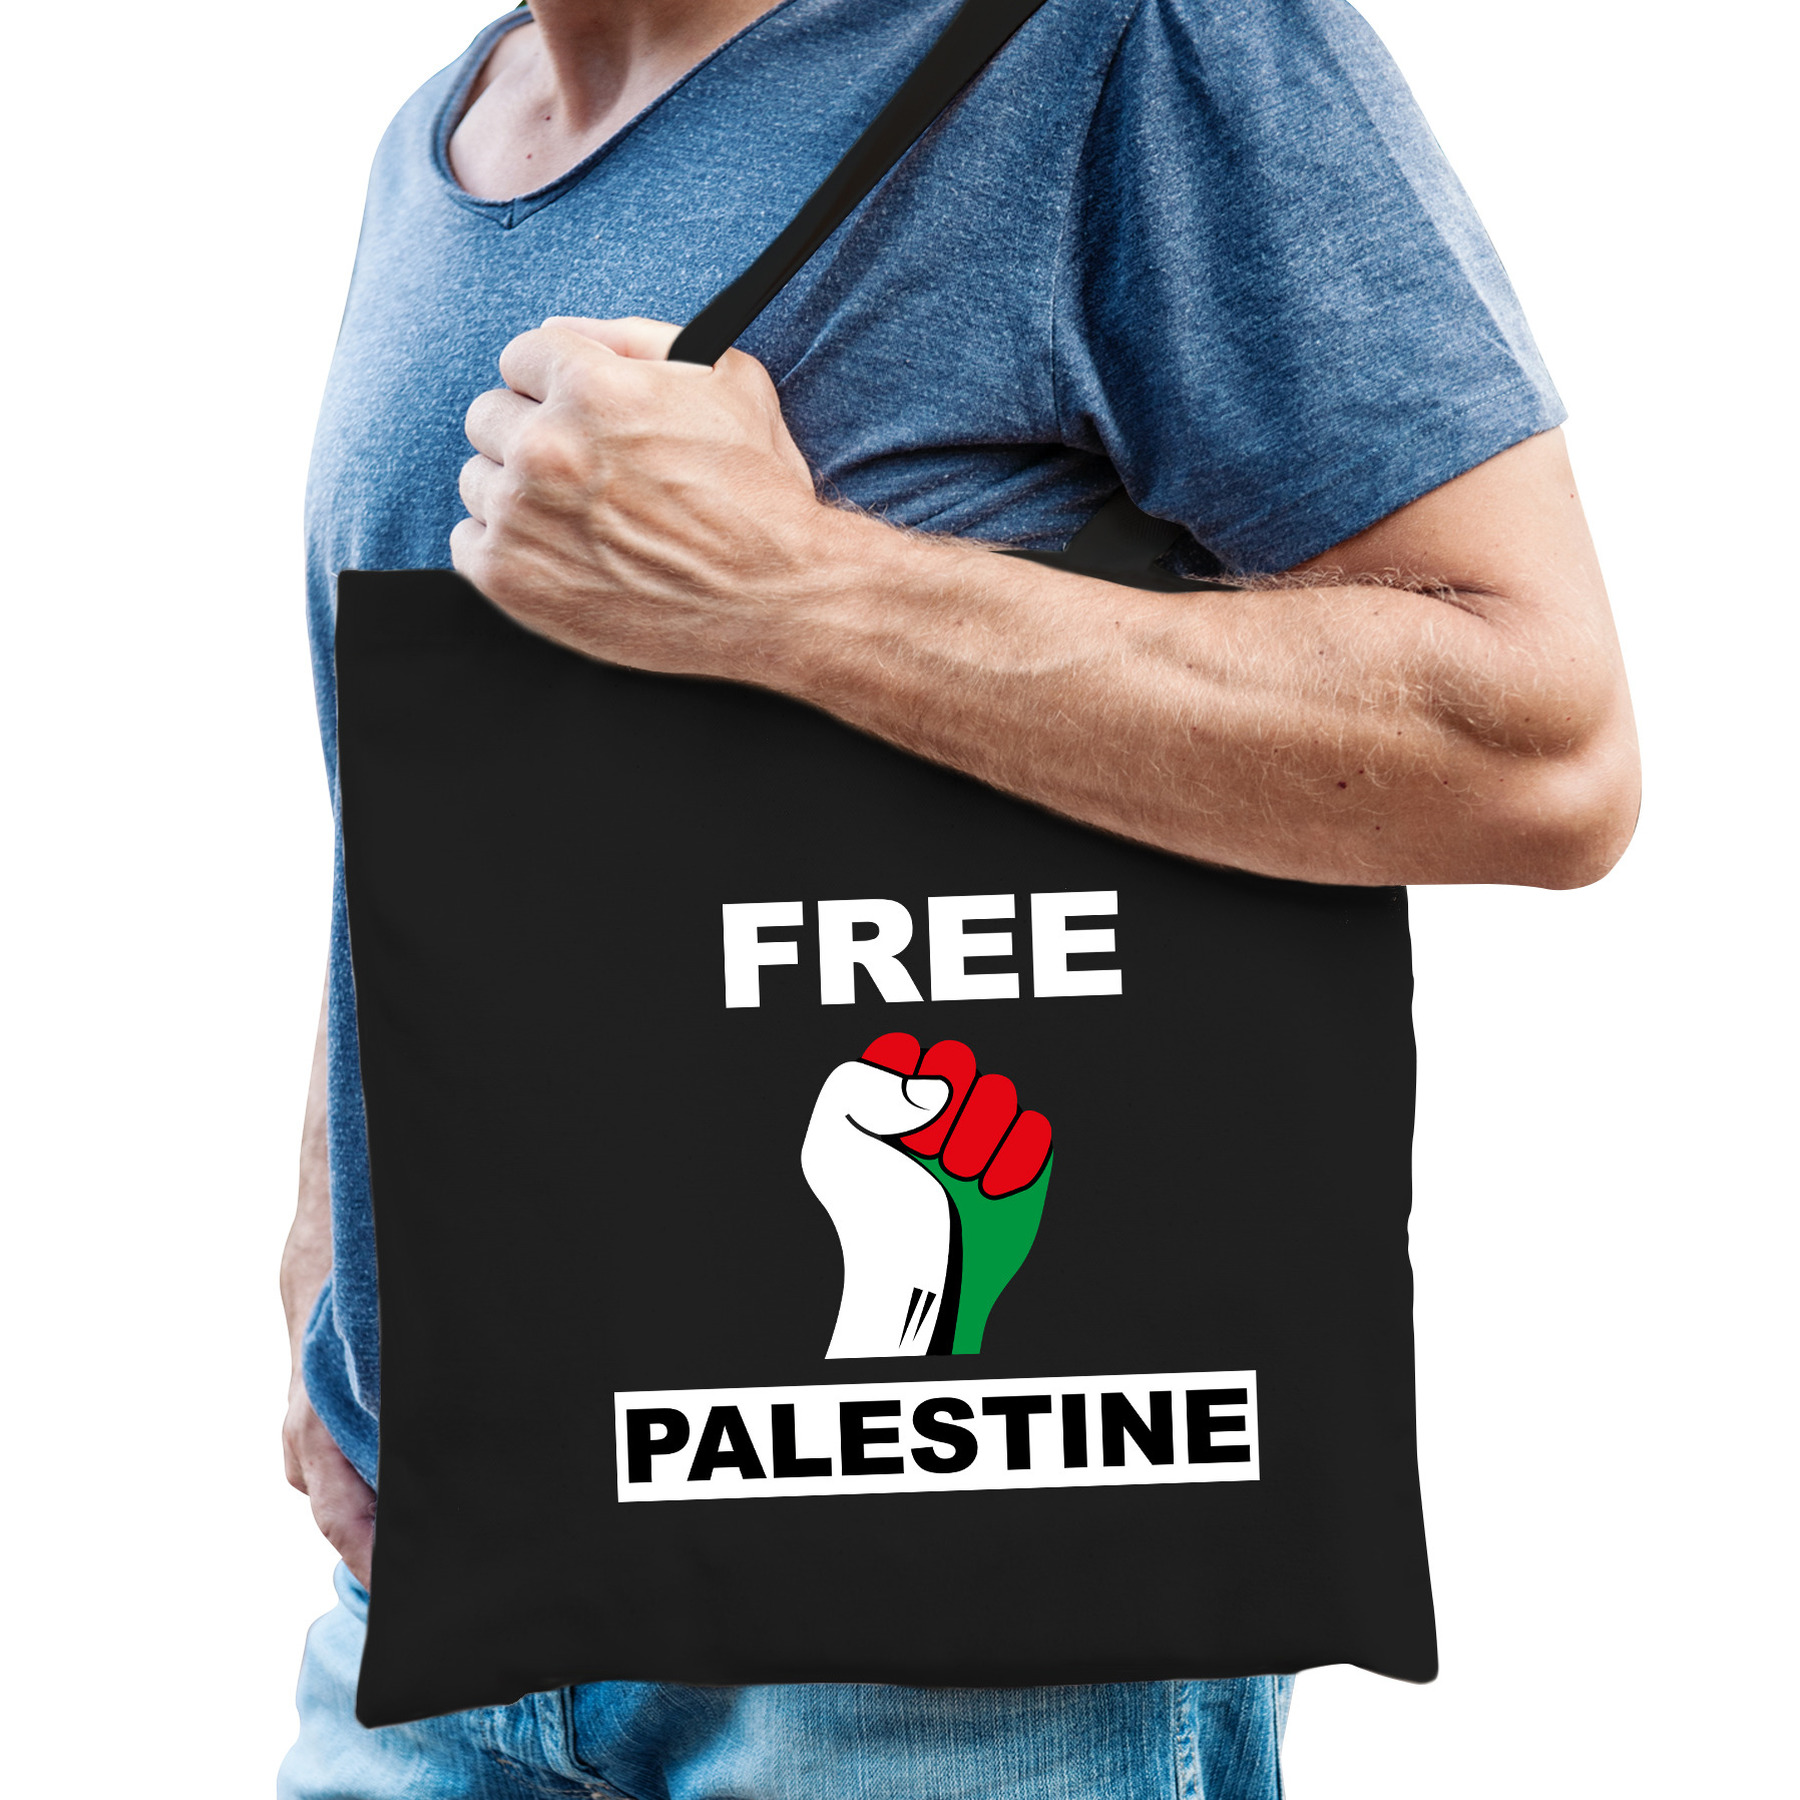 Free Palestine katoenen tasje zwart heren Palestina tas met Palestijnse vlag in vuist